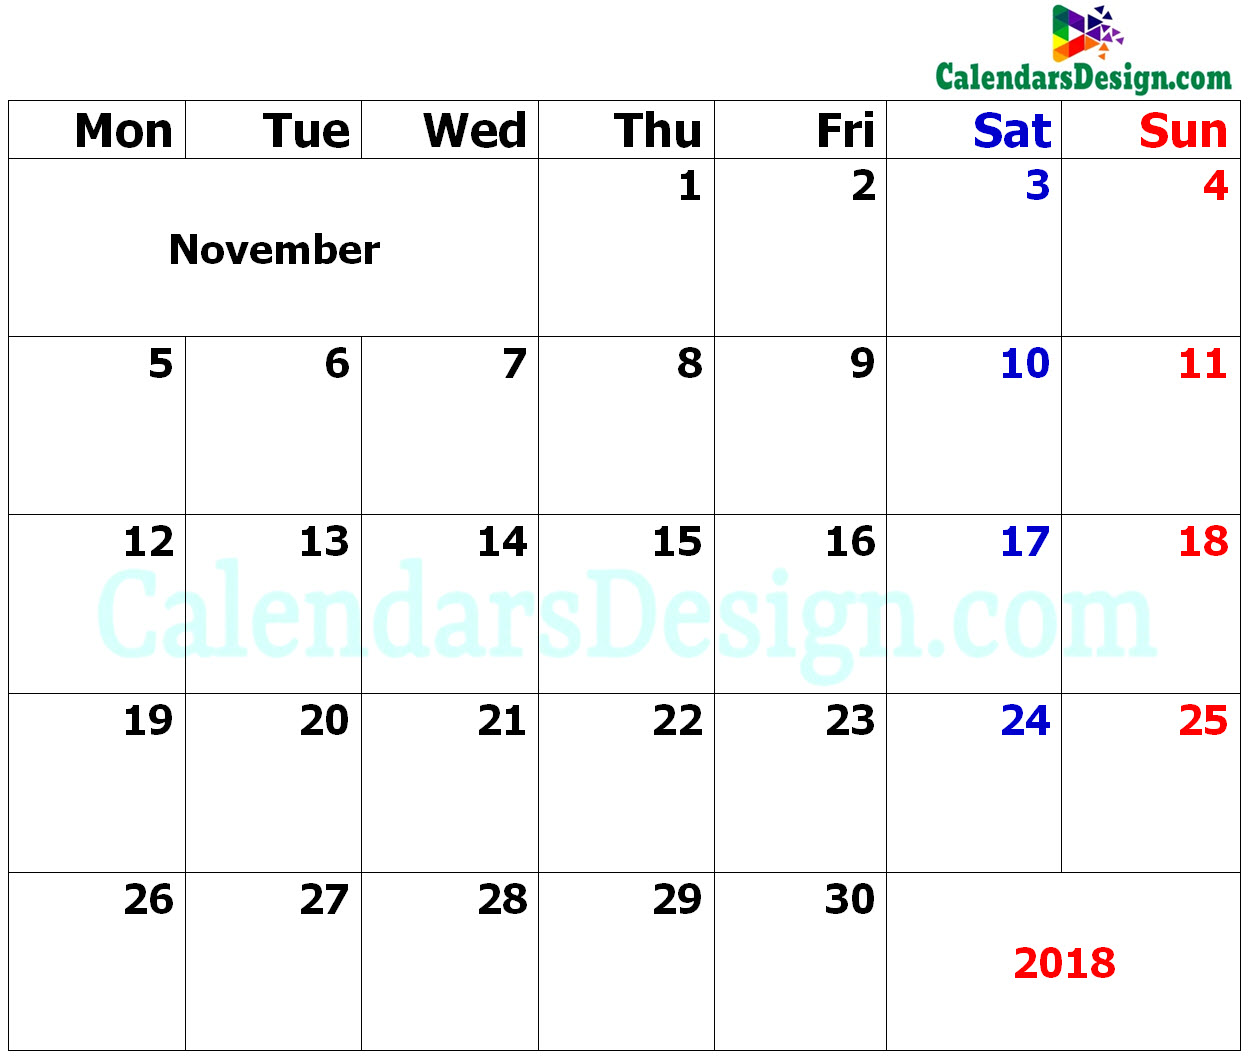 November Calendar 2018 in Excel Format